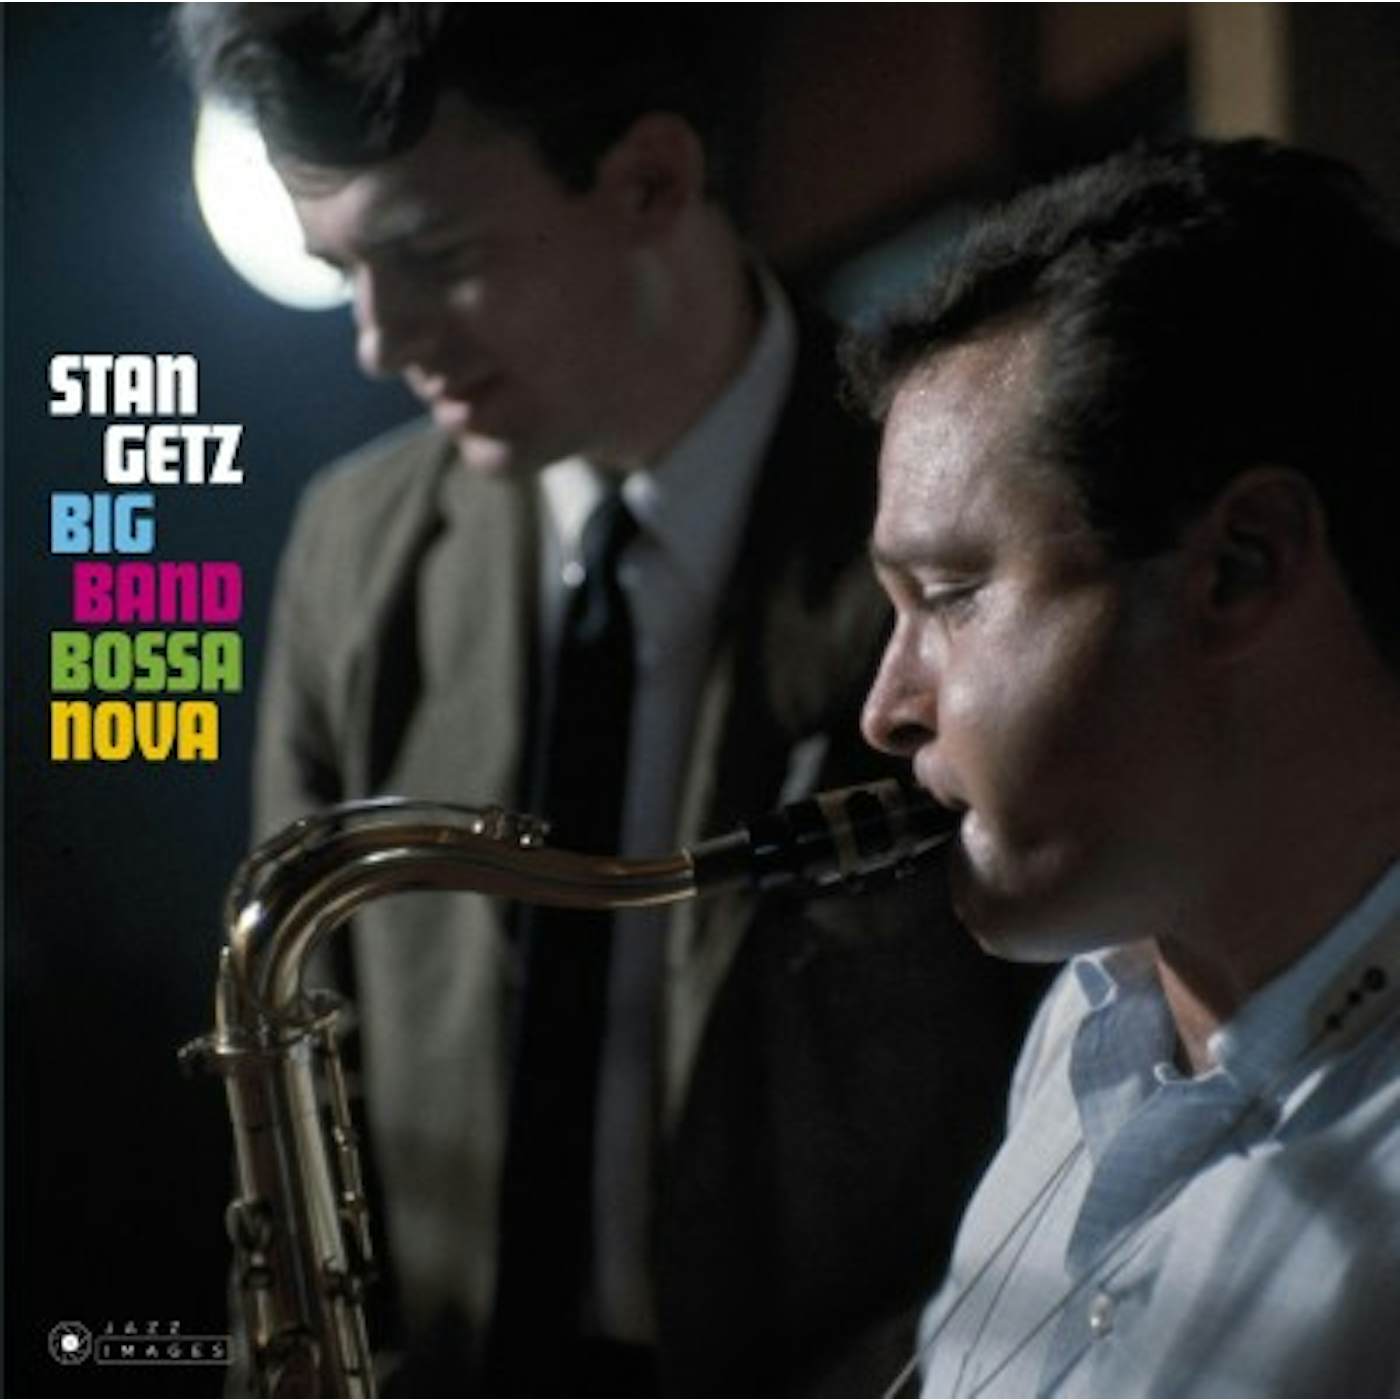 Stan Getz & Joao Gilberto Big Band Bossa Nova Vinyl Record